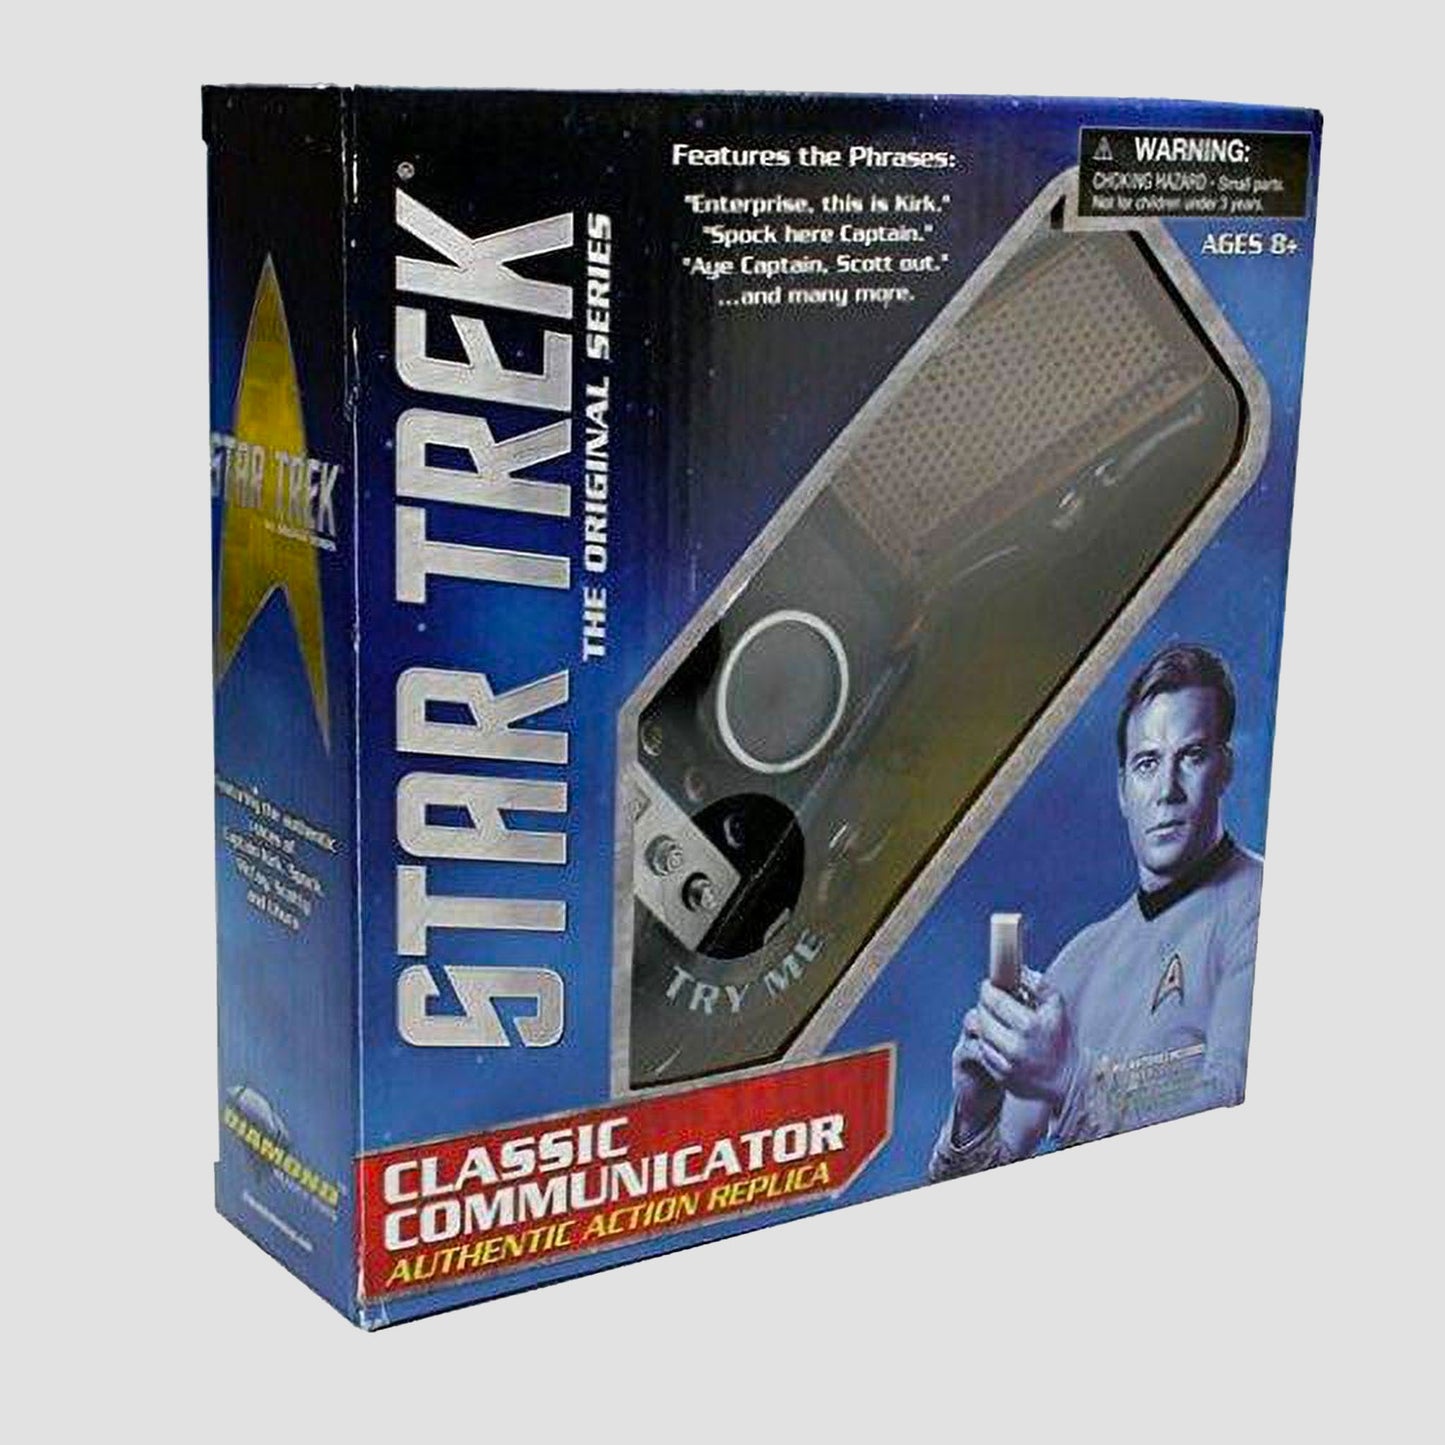 Classic Communicator Ver. 2 (Star Trek: The Original Series) Prop Replica